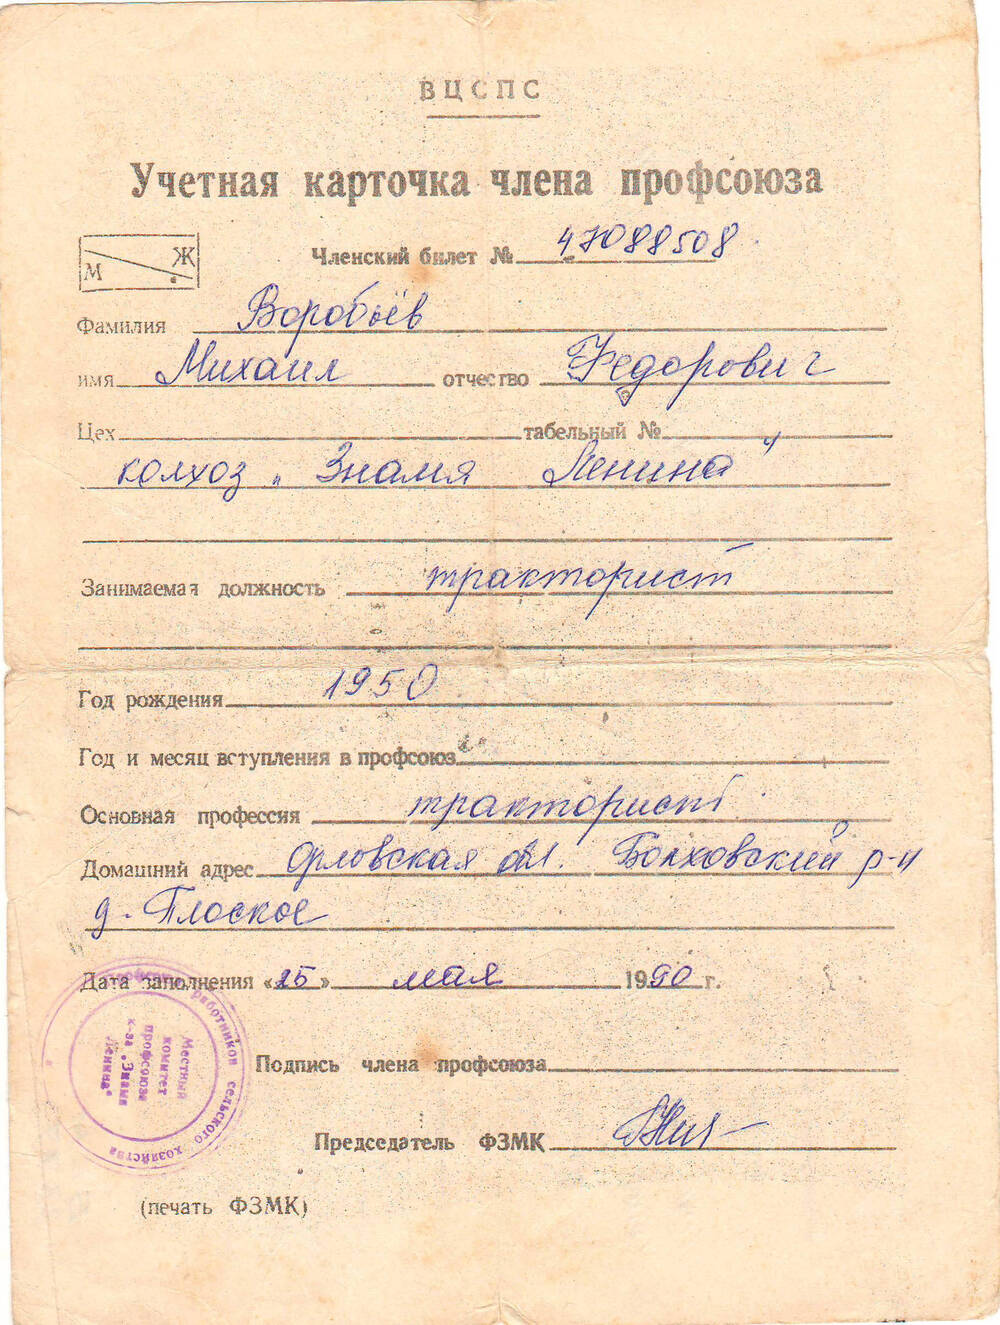 Учетная карточка члена профсоюза Воробьева М.Ф.